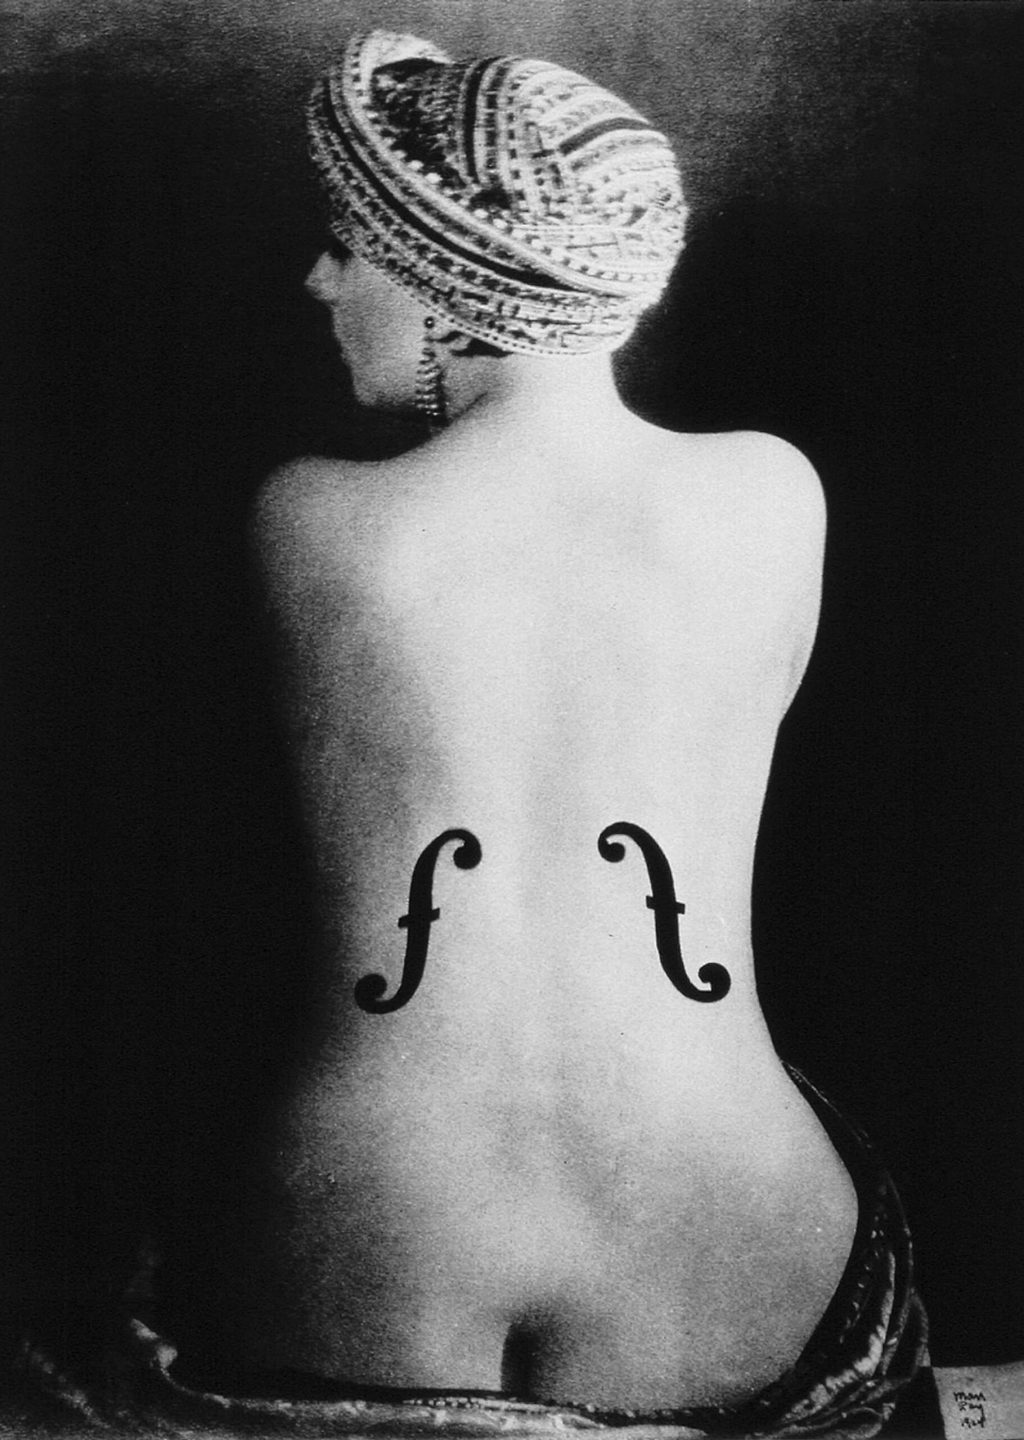 26. Man Ray, Le violon d'Ingres, 1924-1977